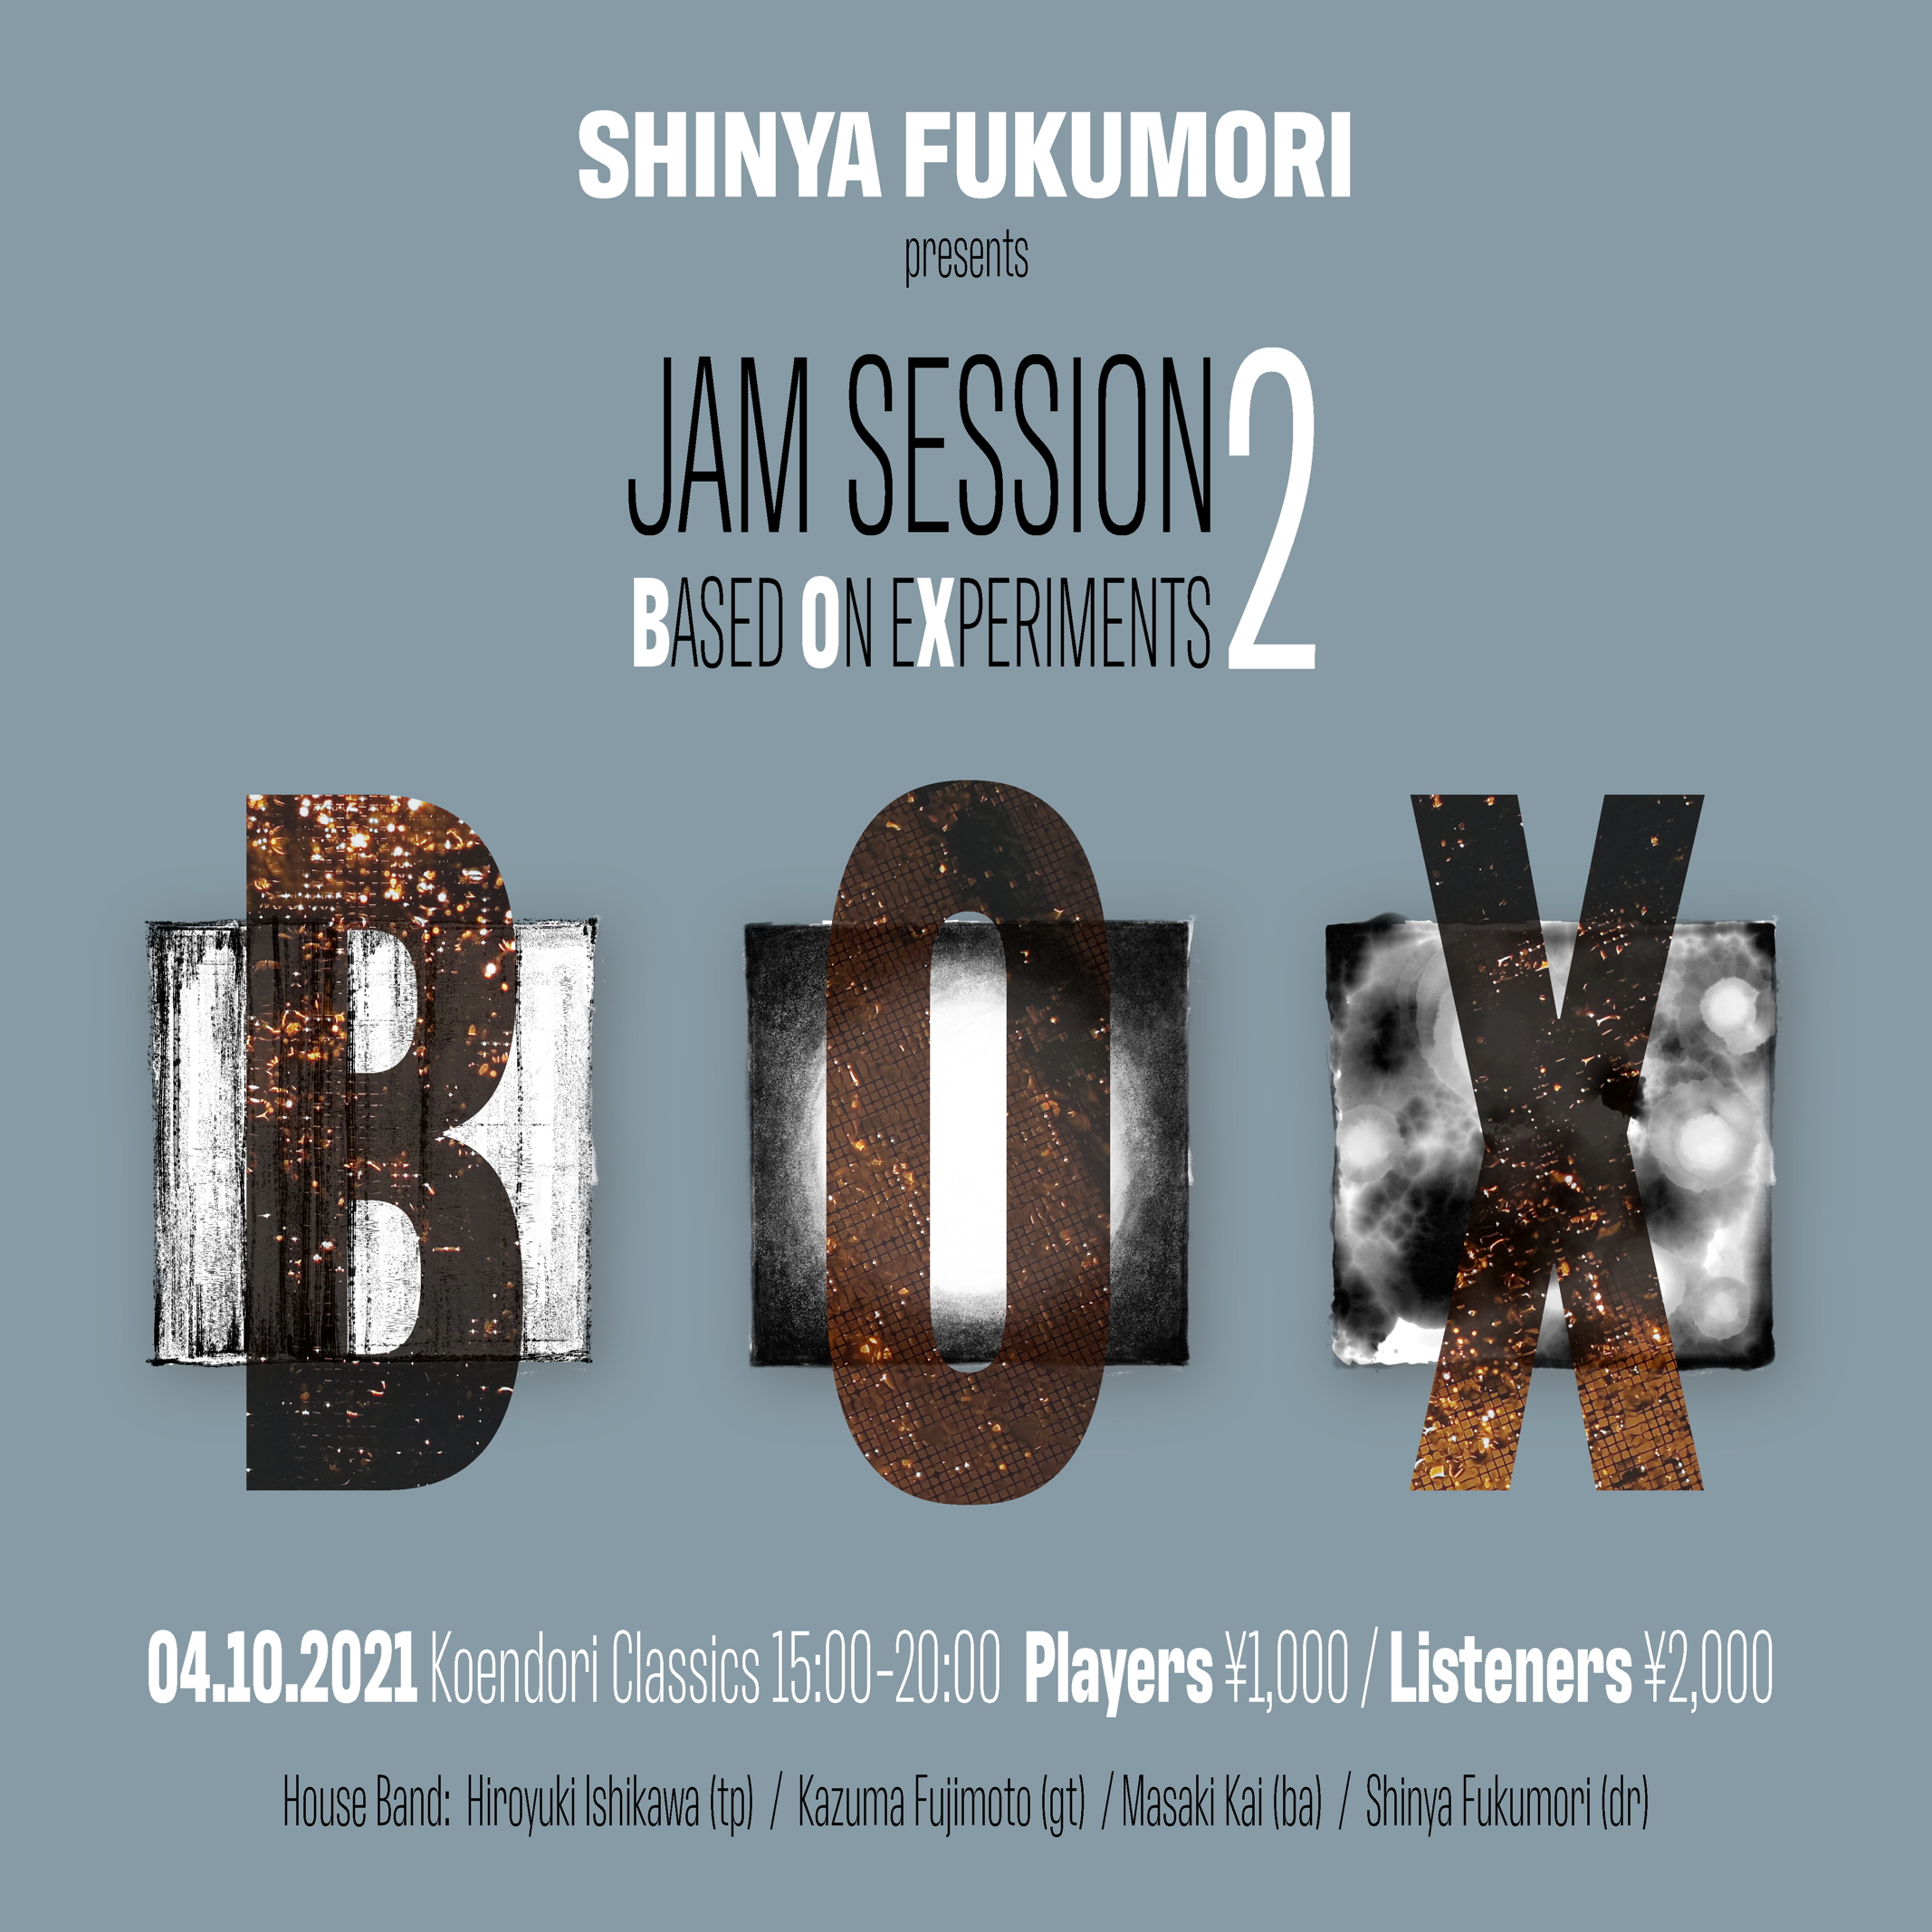 SHINYA FUKUMORI presents JAM SESSION BASED ON EXPERIMENTS 2